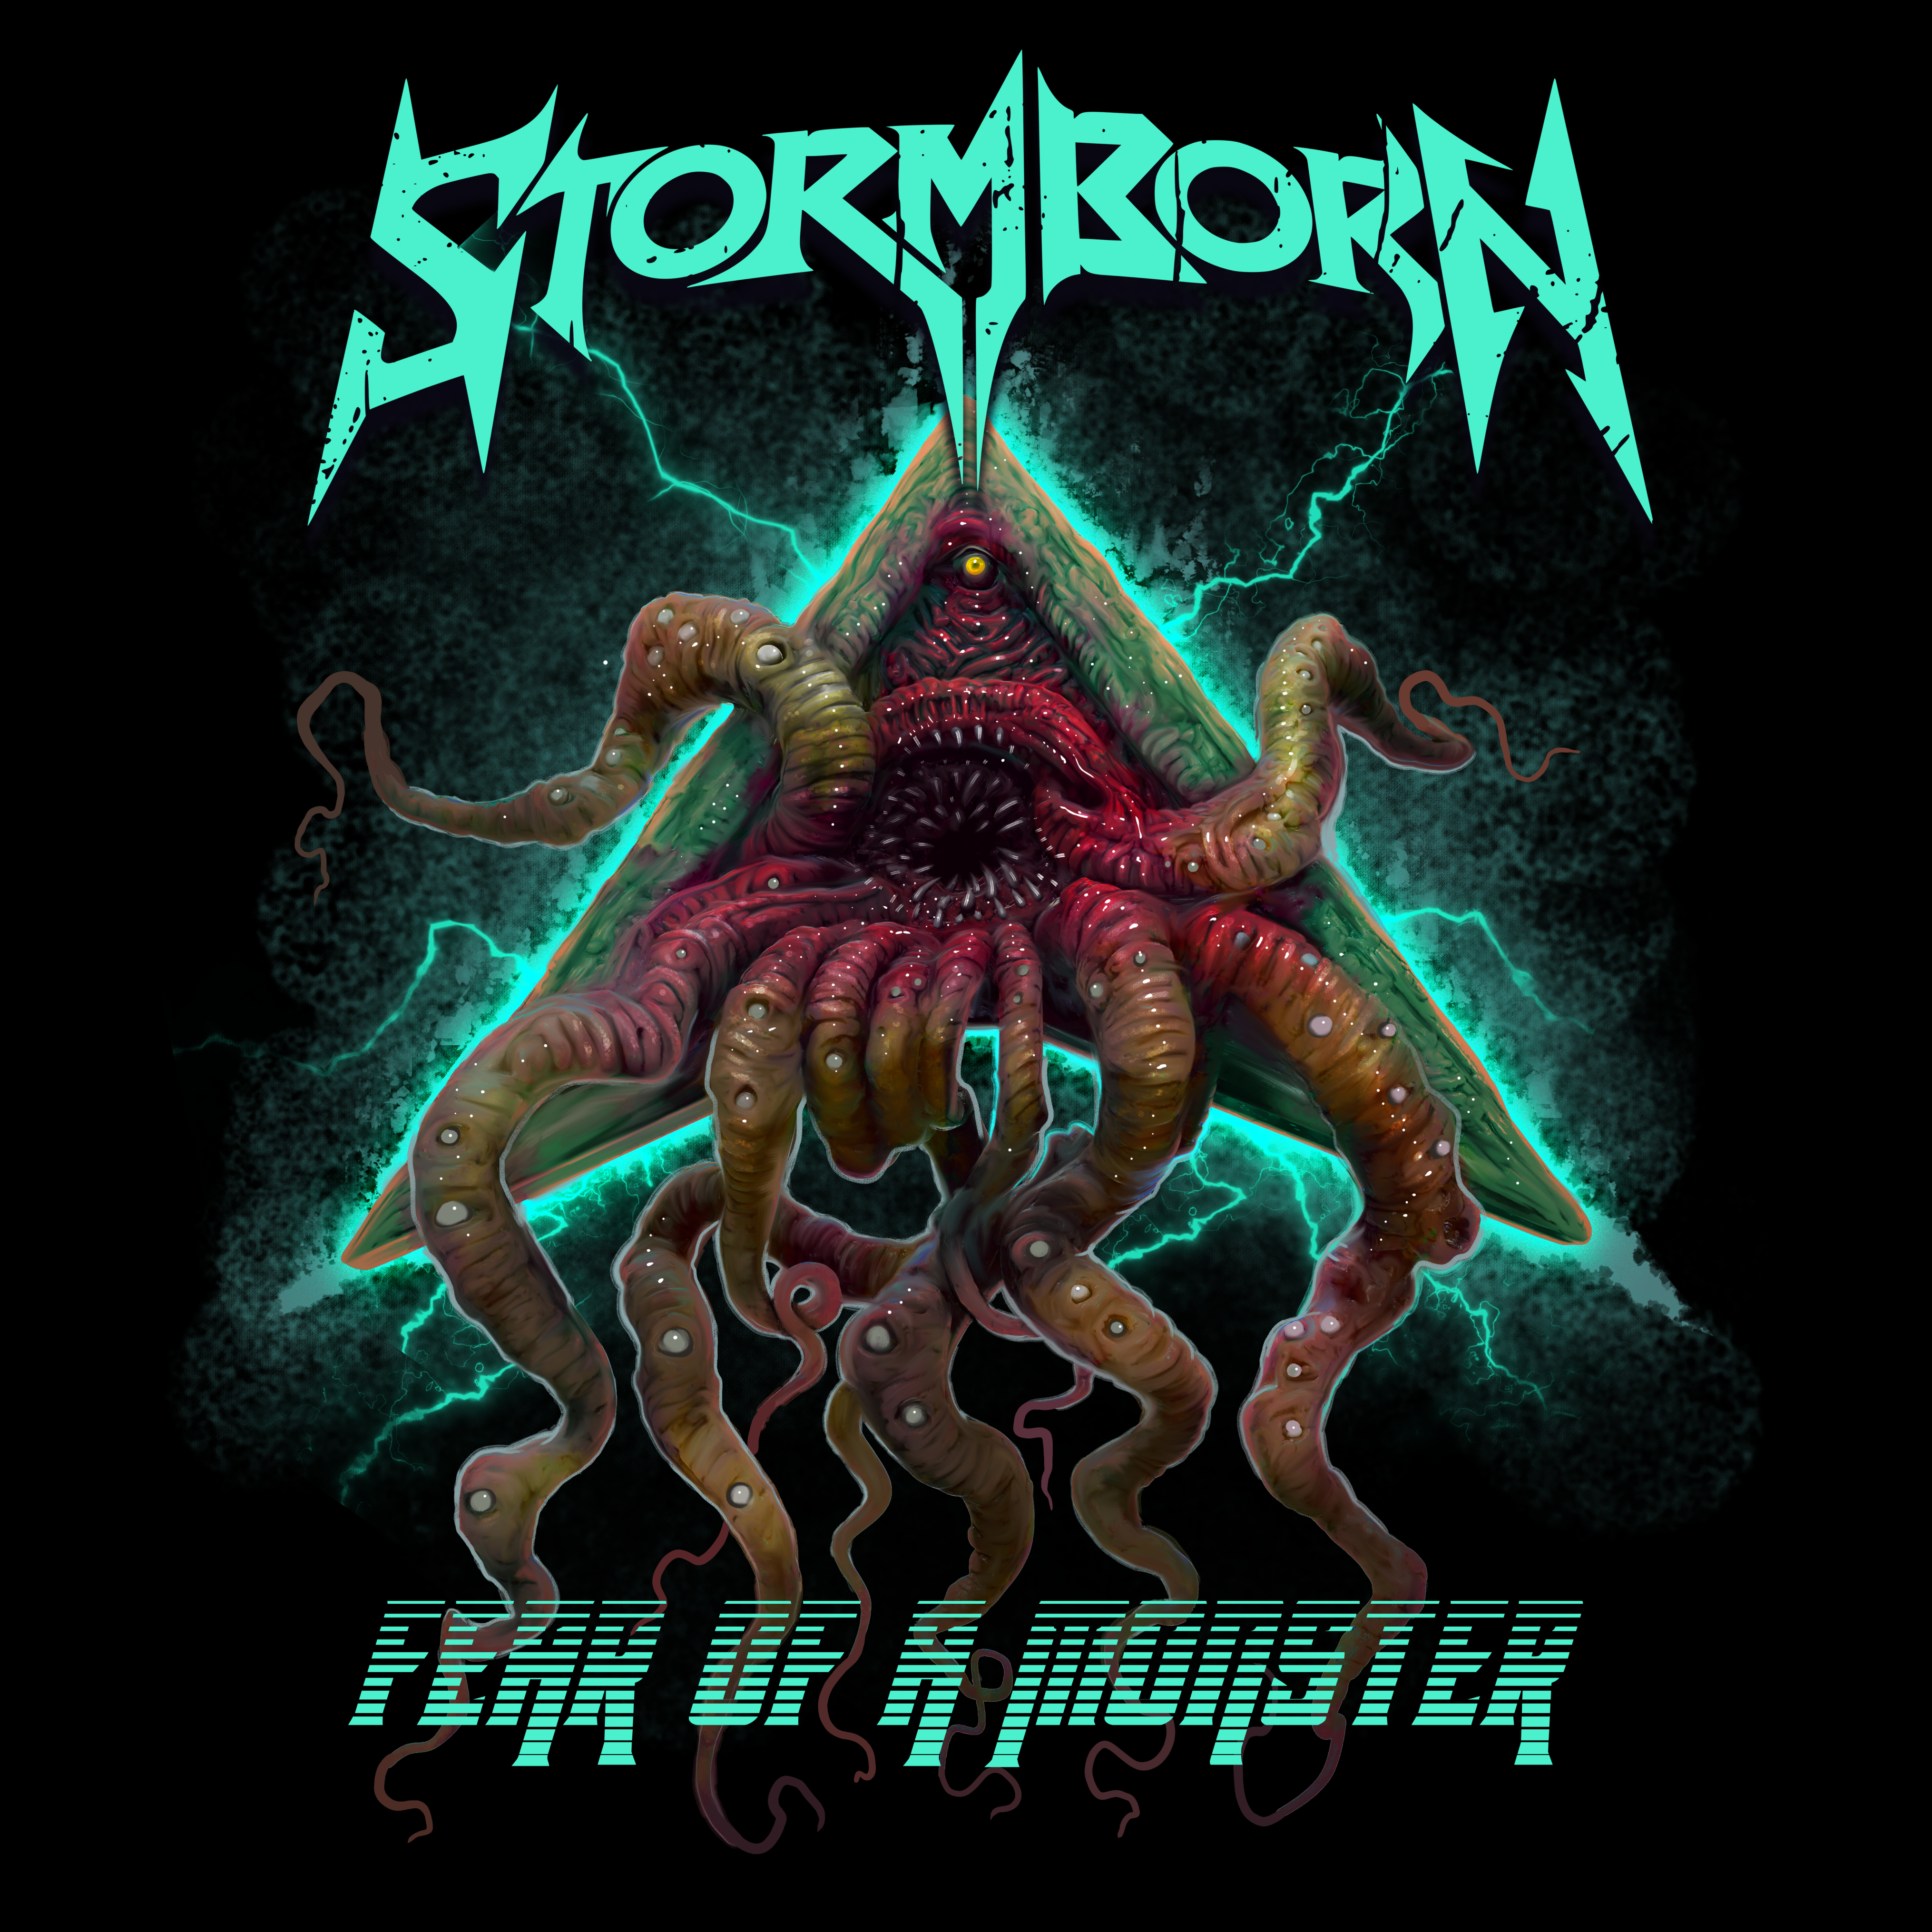 Art for Fear Of A Monster by Stormborn